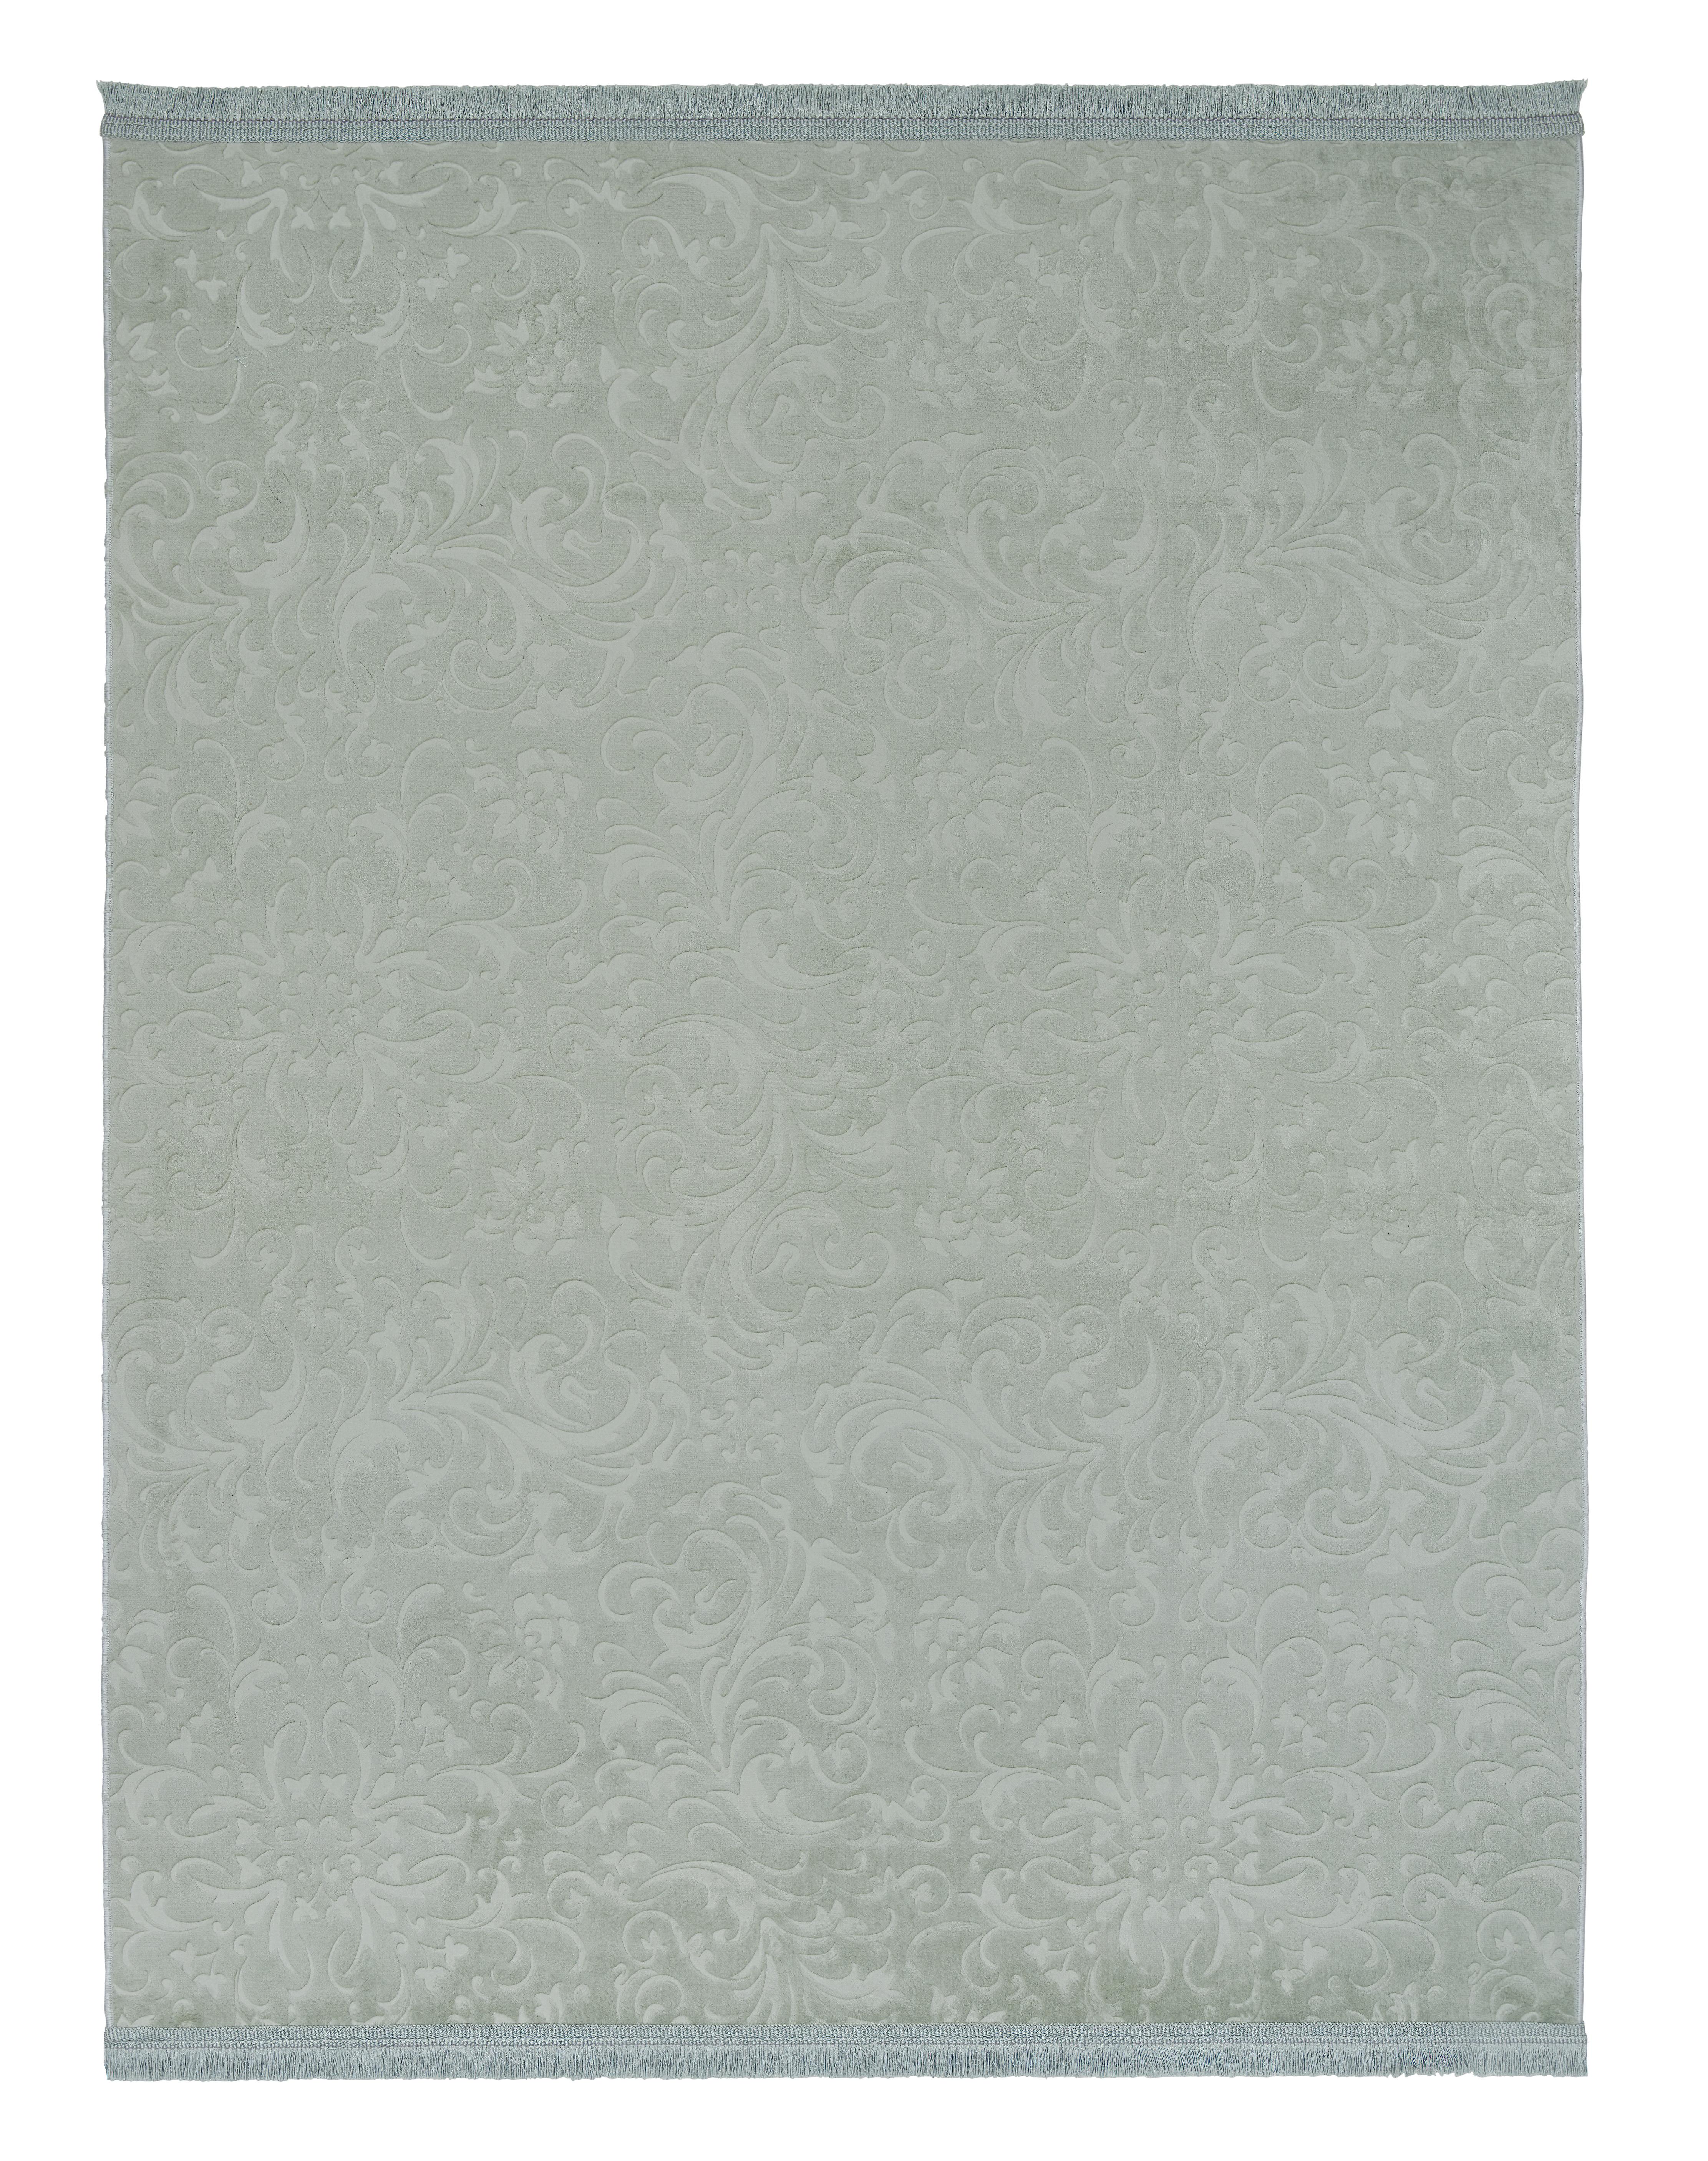 Tkaný Koberec Daphne 2, 120/160cm, Zelená - zelená, Moderný, textil (120/160cm) - Modern Living